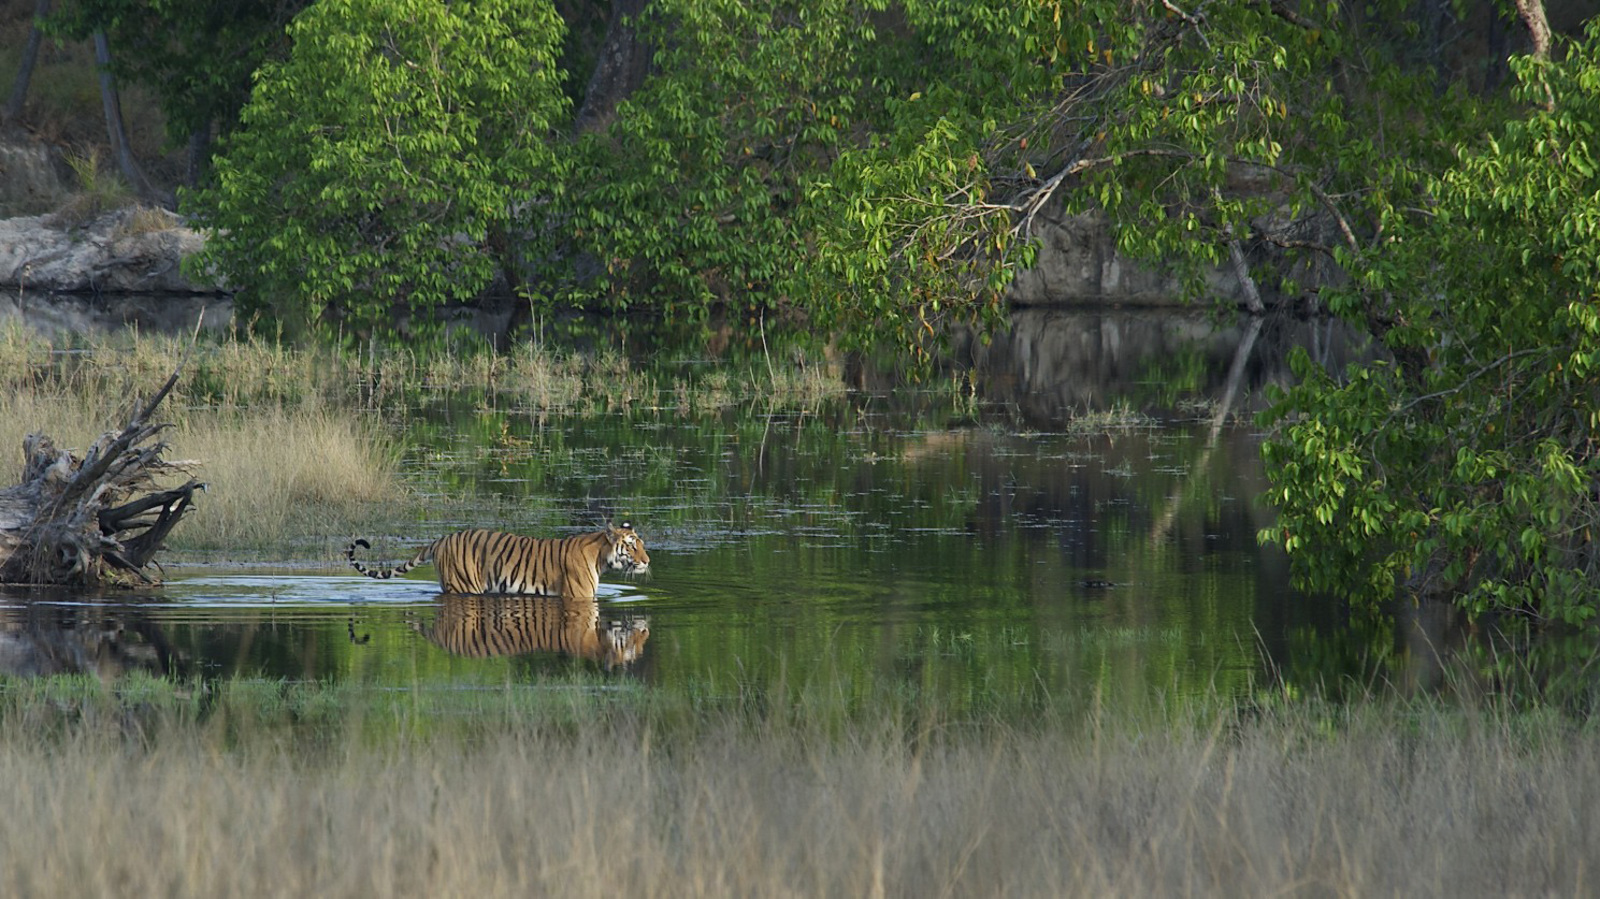 Tiger, Nature